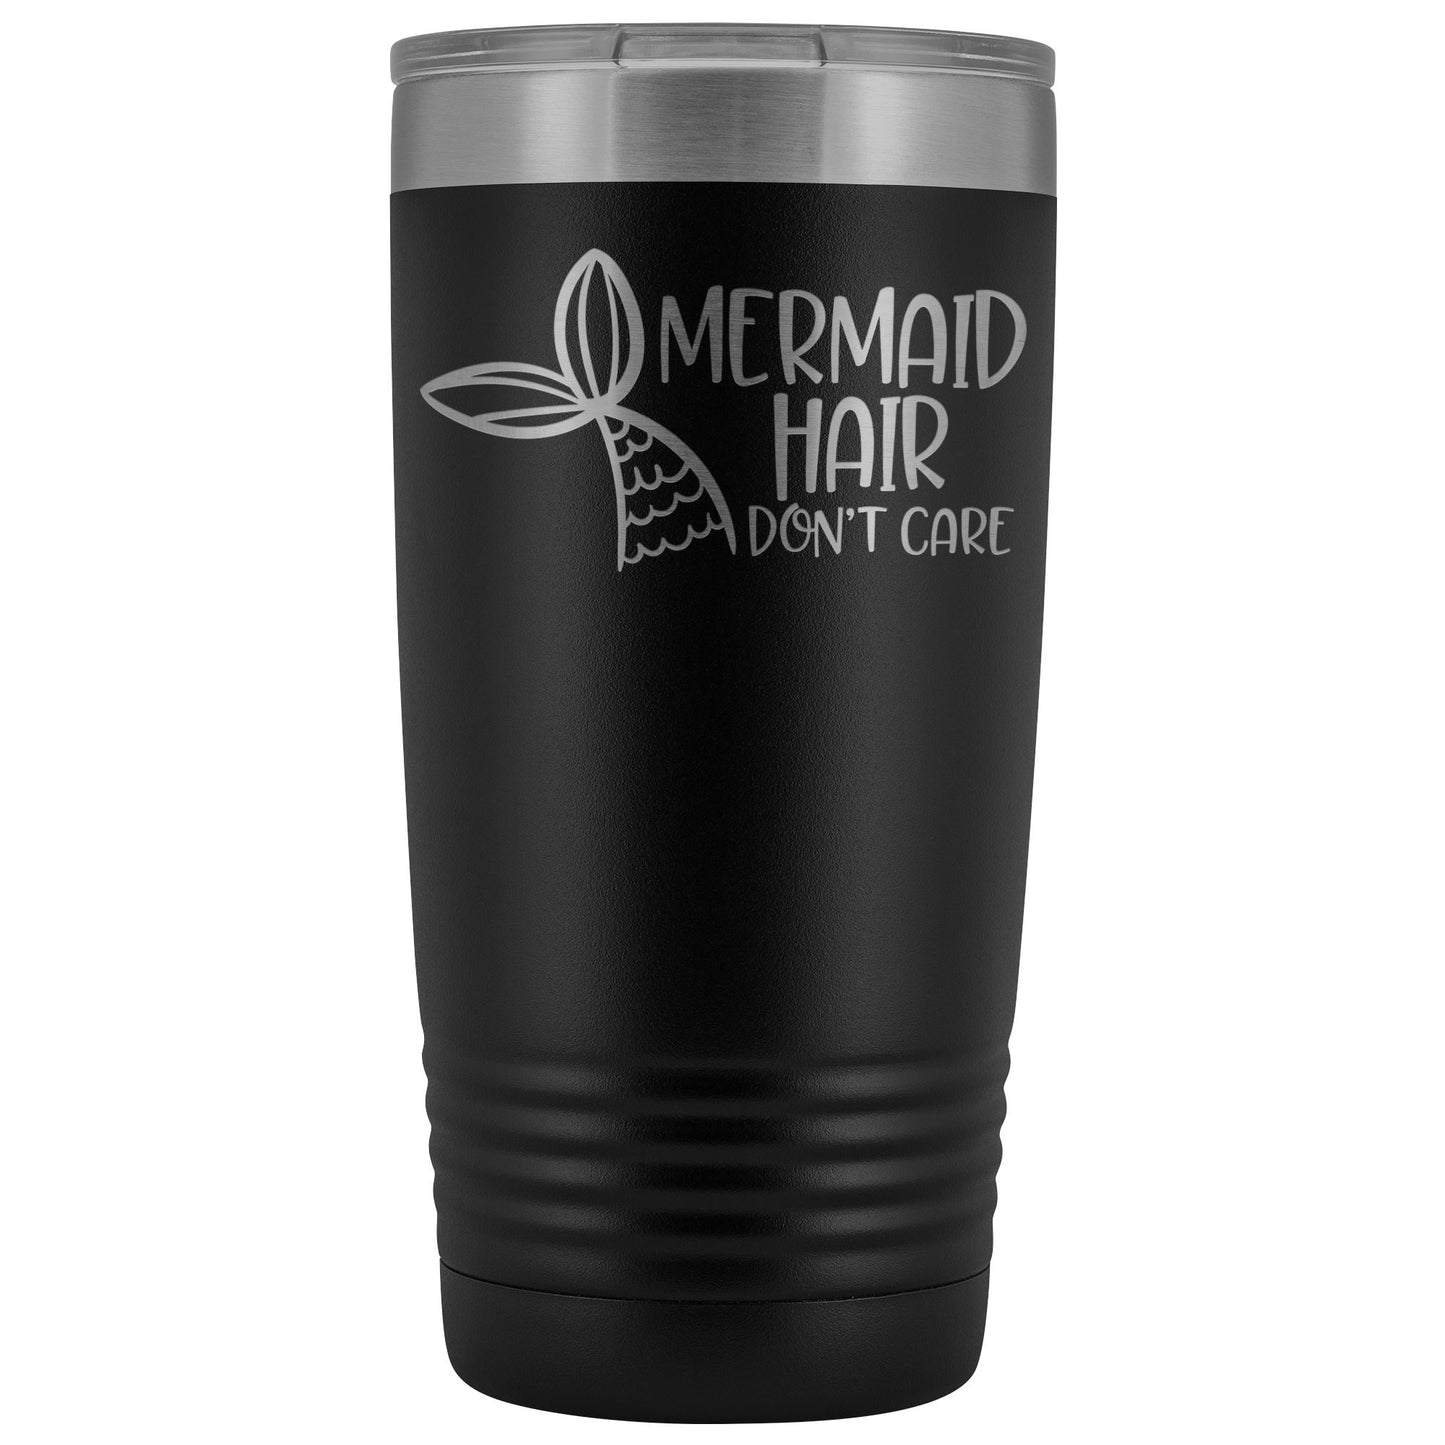 Mermaid Hair, Don't Care 20oz. Insulated Tumbler